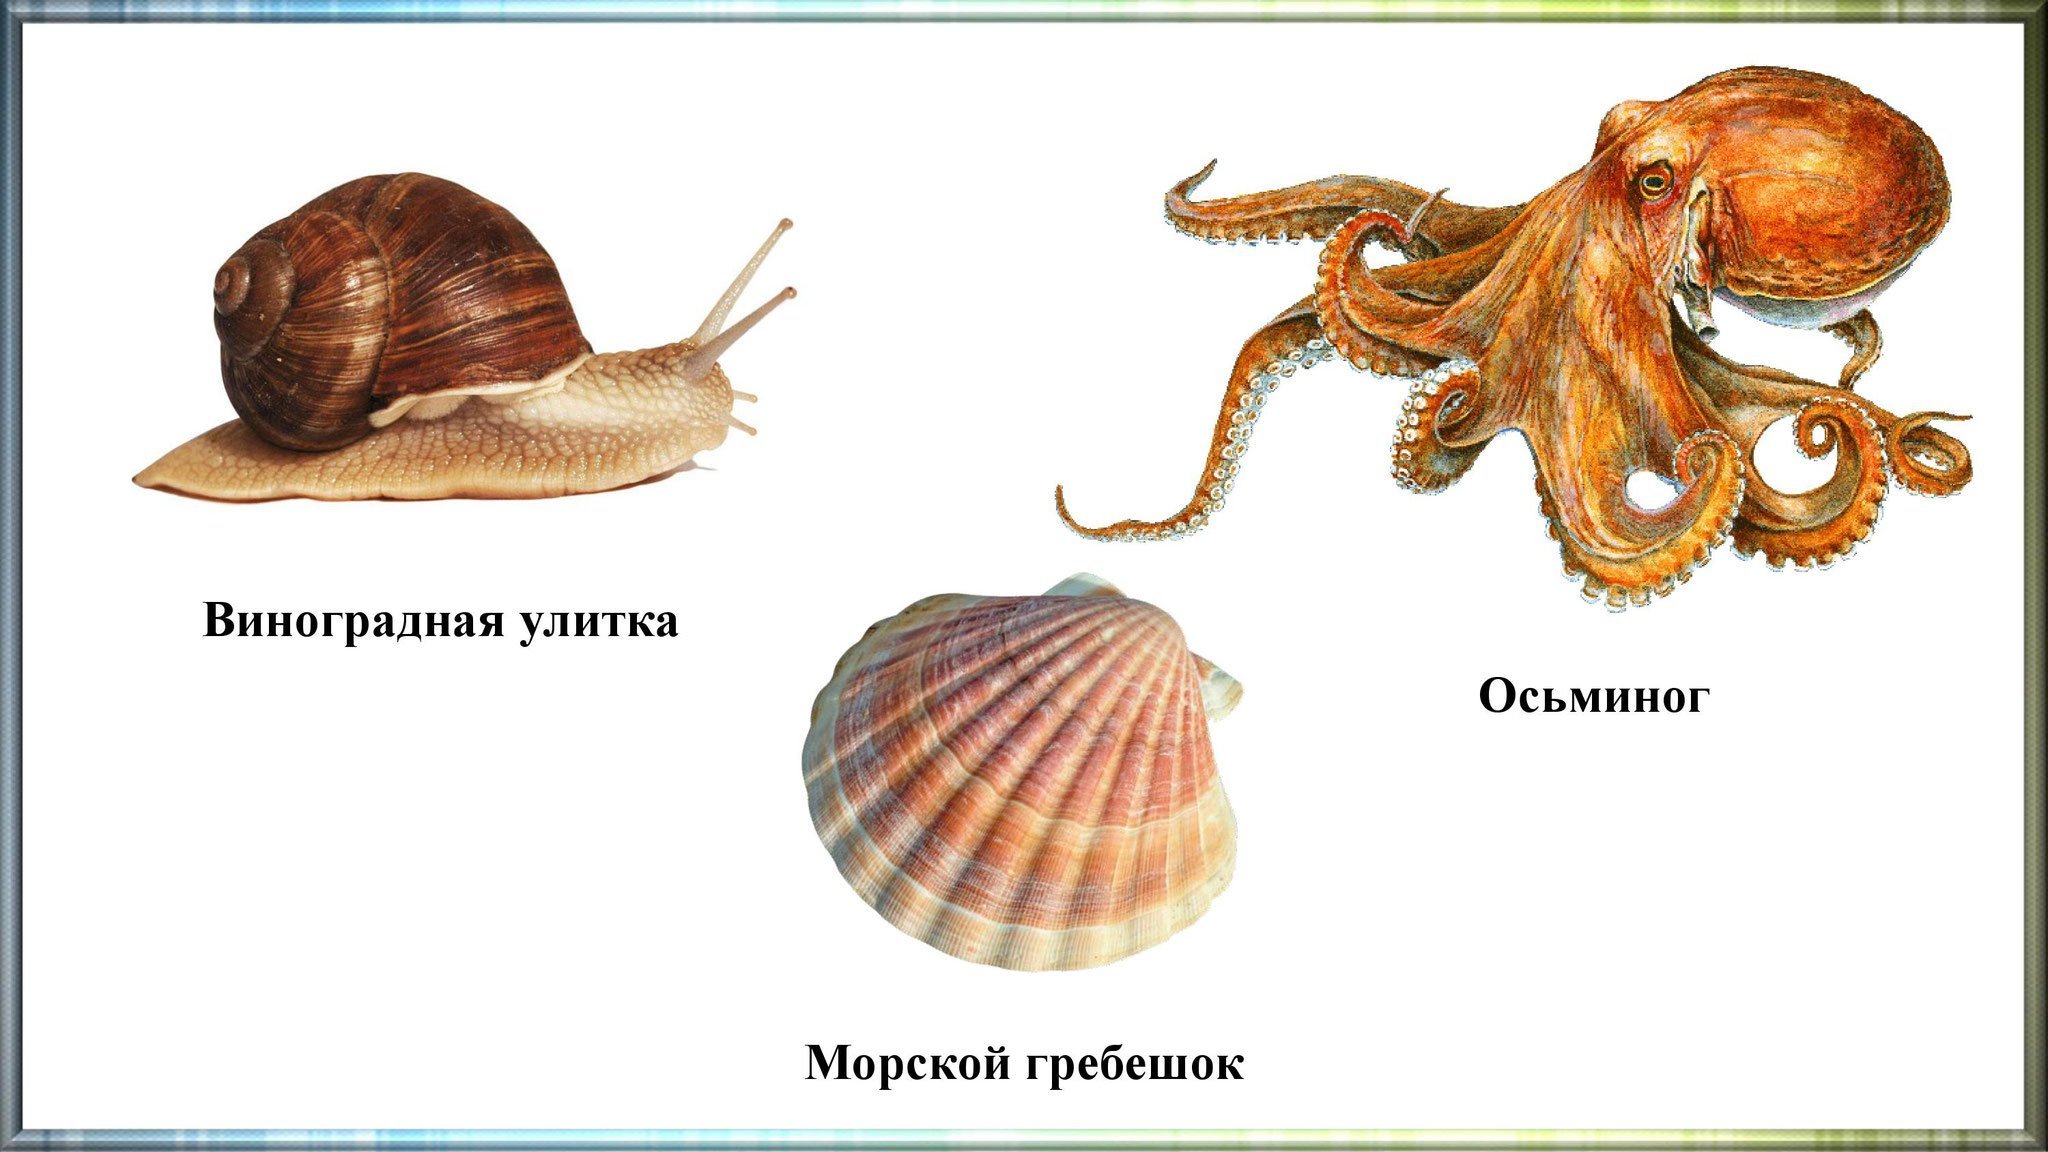 Приведите по три примера животных моллюски. Беспозвоночные моллюски. Моллюски животные представители. Представители типа моллюсков. Беспозвоночные моллюски название.